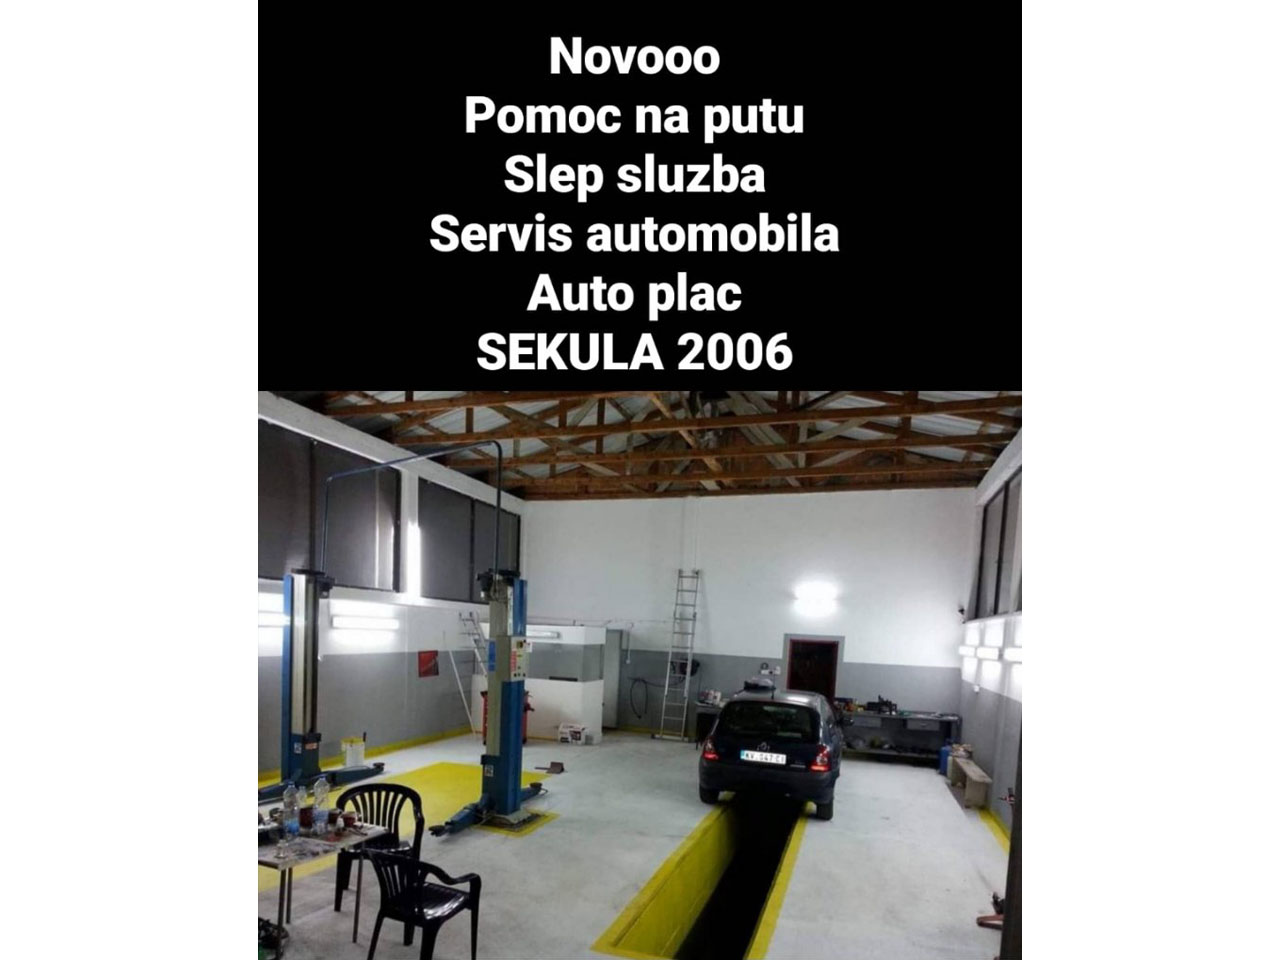 CAR AND TOWING SERVICE SEKULA 2006 Bars and night-clubs Kraljevo - Photo 7